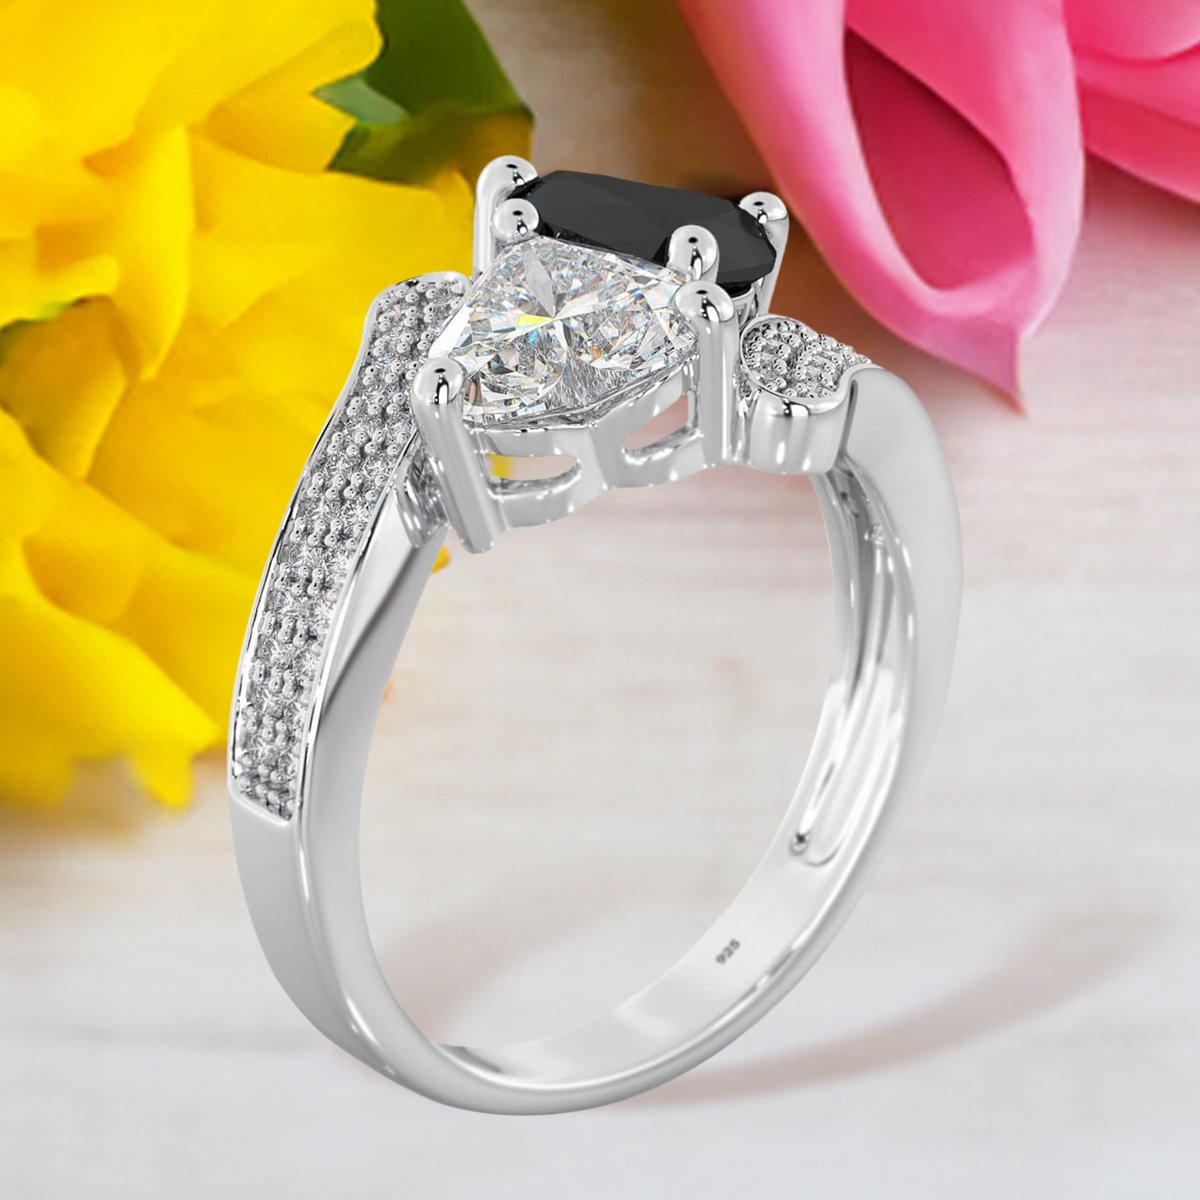 925 Sterling Silver Heart Design Black Cubic Zirconia Ring

Find it here: bit.ly/2zj9Eq8

#womenrings #weddingrings #lovejewelry #silverjewelry #sterlingsilver #cubiczirconia #besttohave #besttohavejewelry #silverring #zirconia